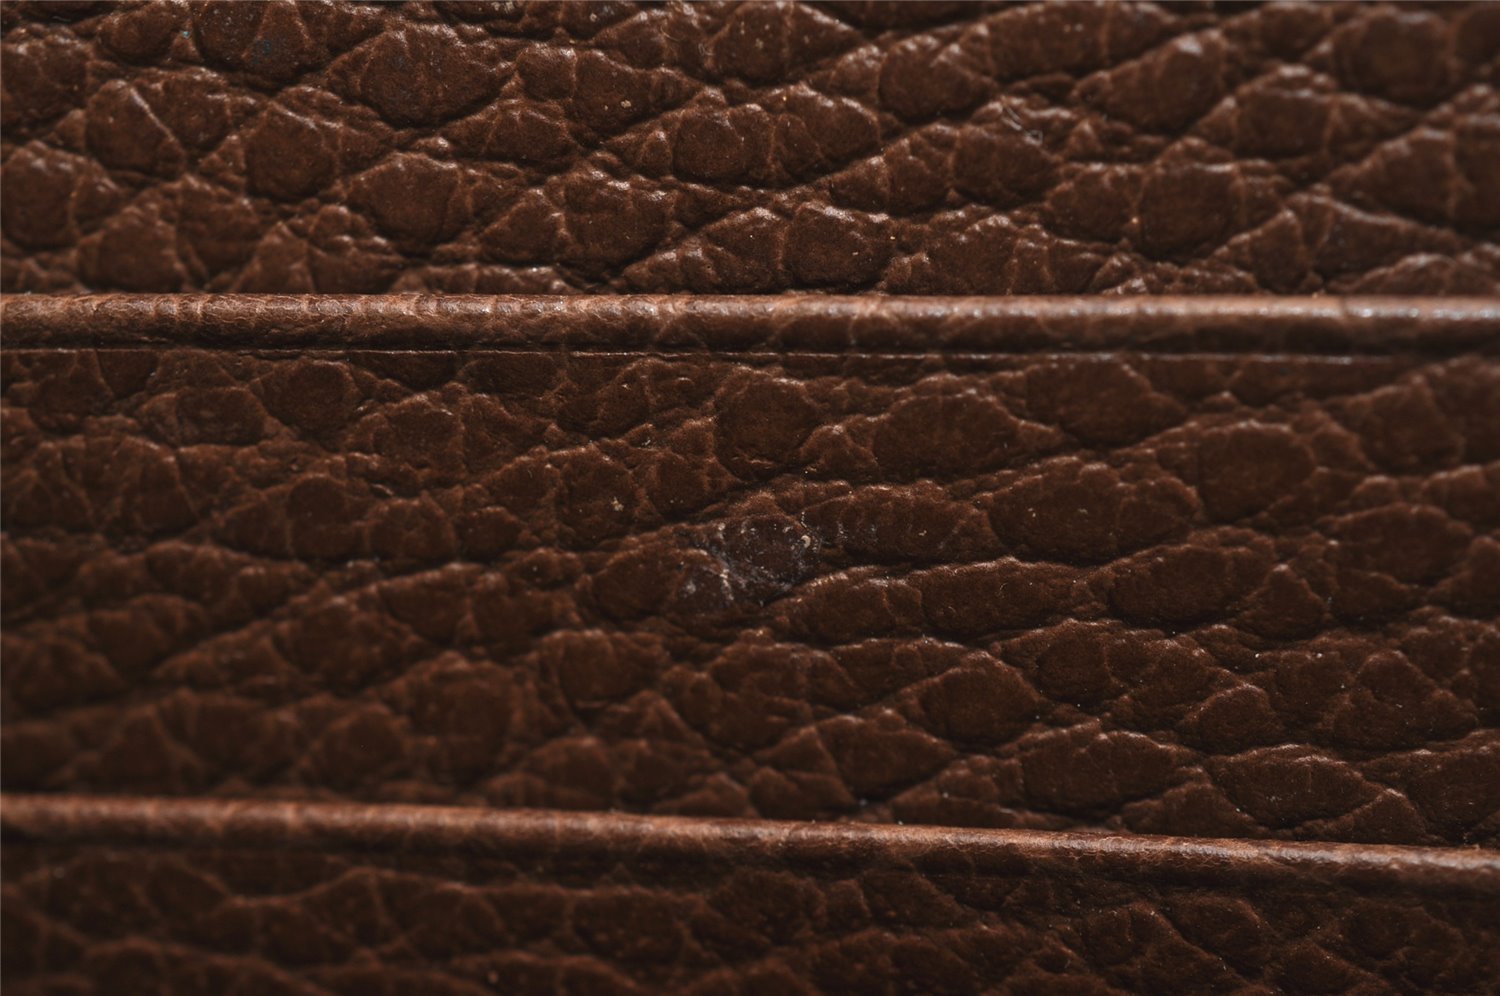 Authentic GUCCI Vintage Long Wallet Purse GG Canvas Leather 363423 Brown 4085J